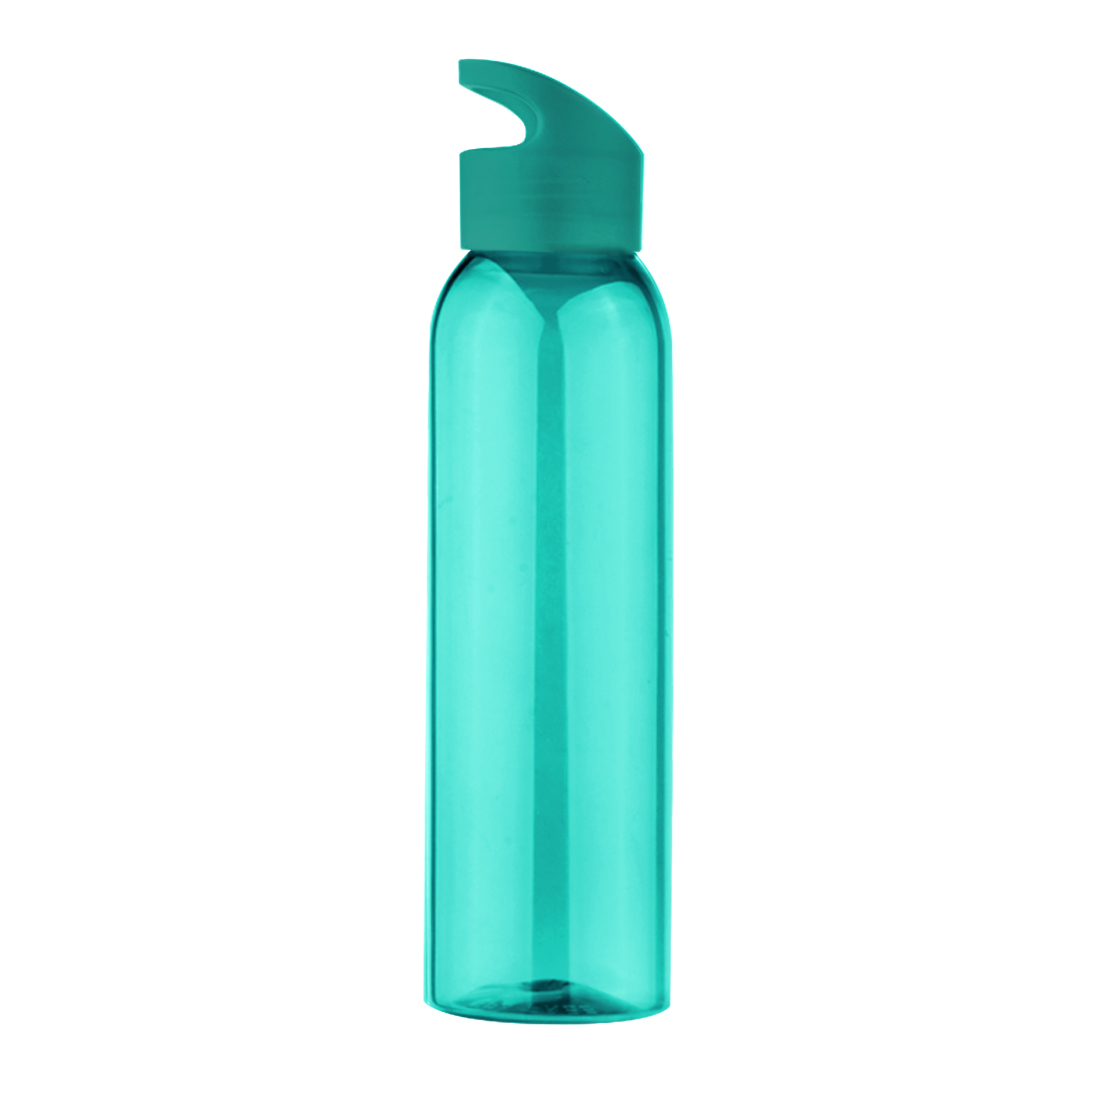 Бутылка пластиковая для воды Sportes